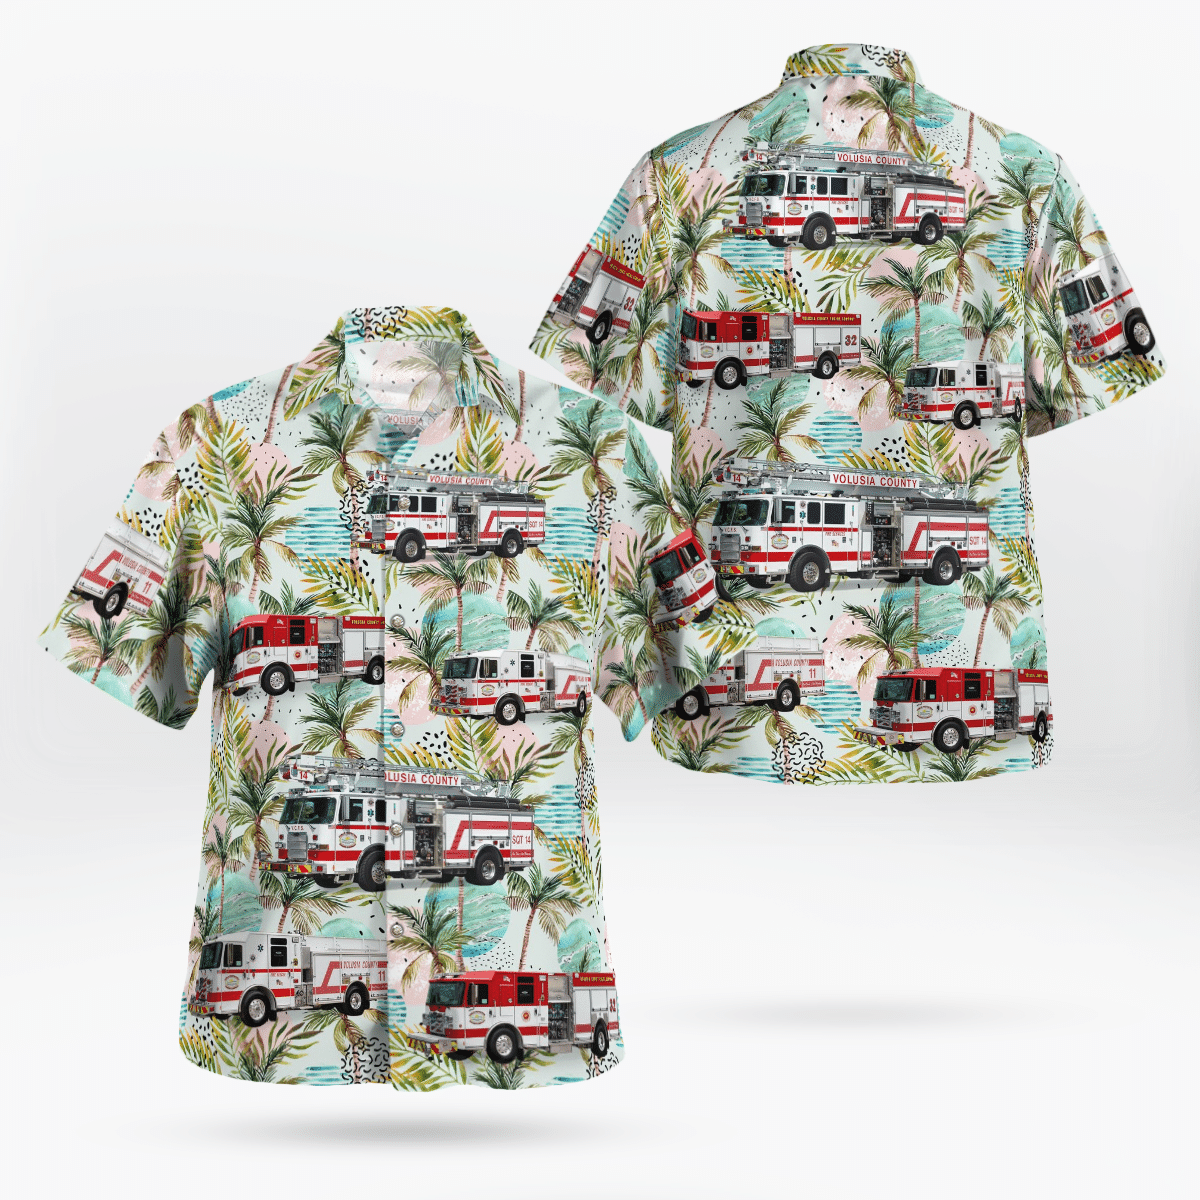 Listed below are some High-quality Aloha Shirt 213